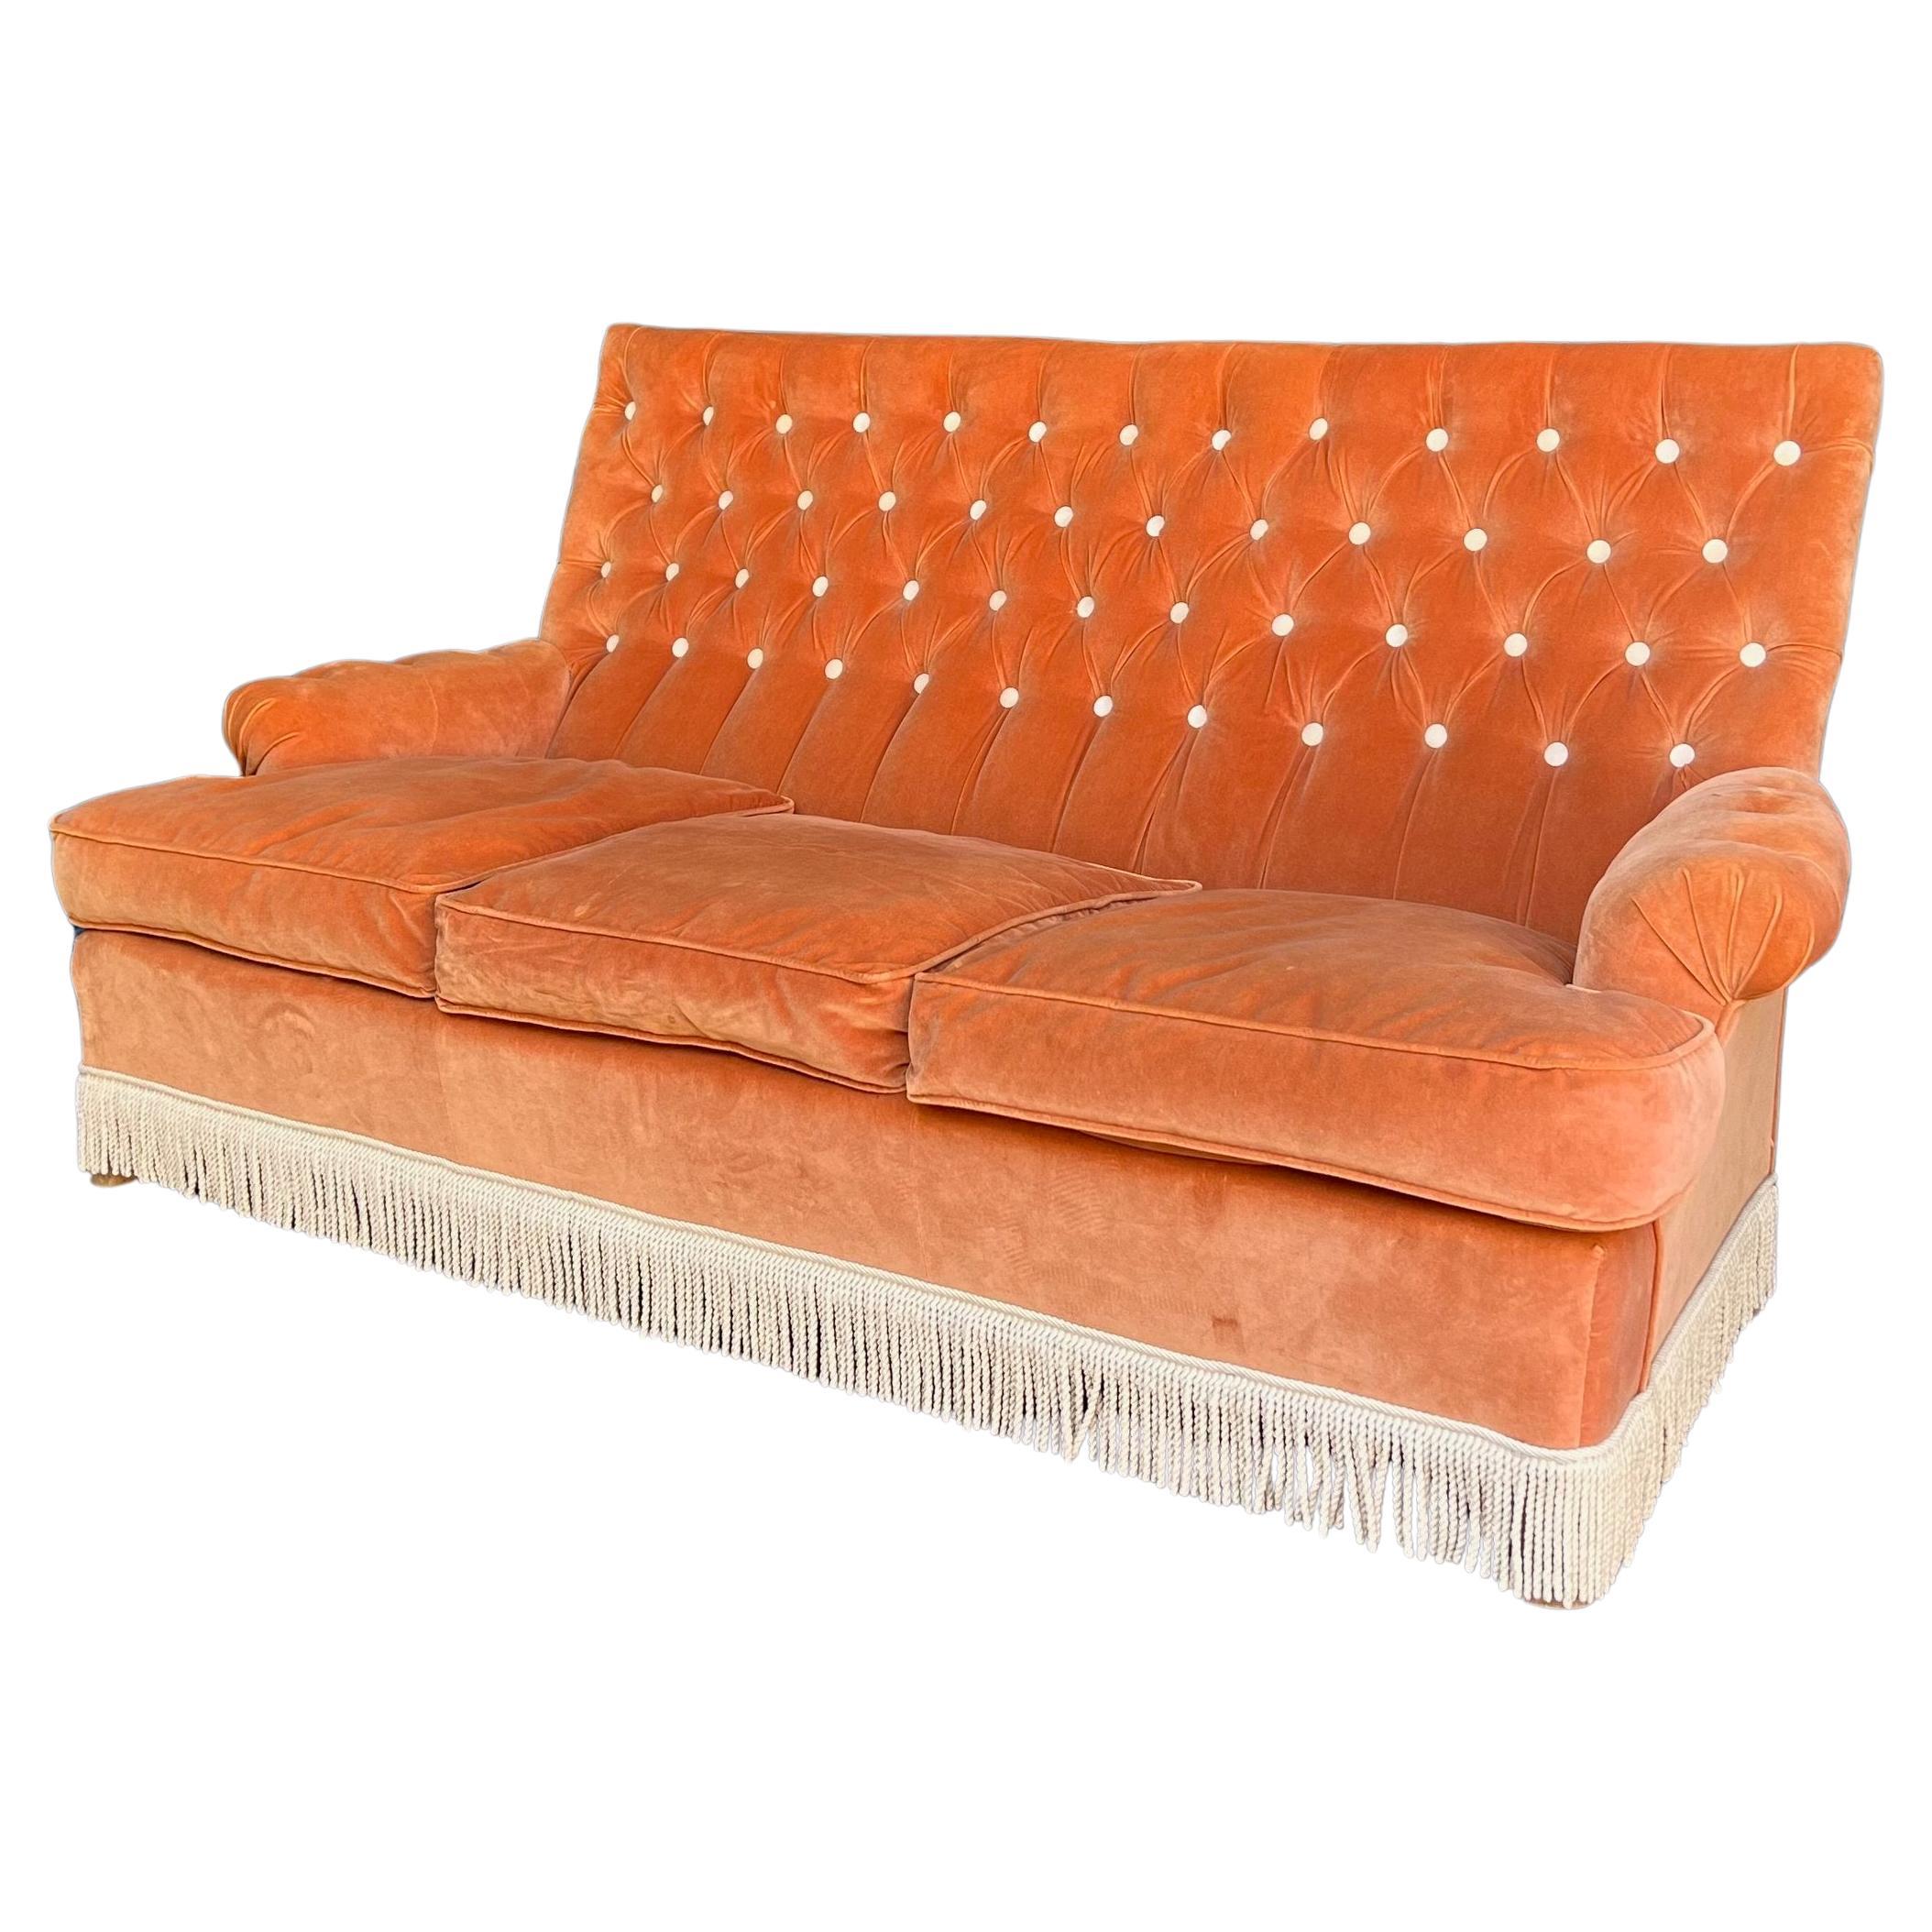 French Napoleon III Sofa in Pale Orange Velvet and White Fringe